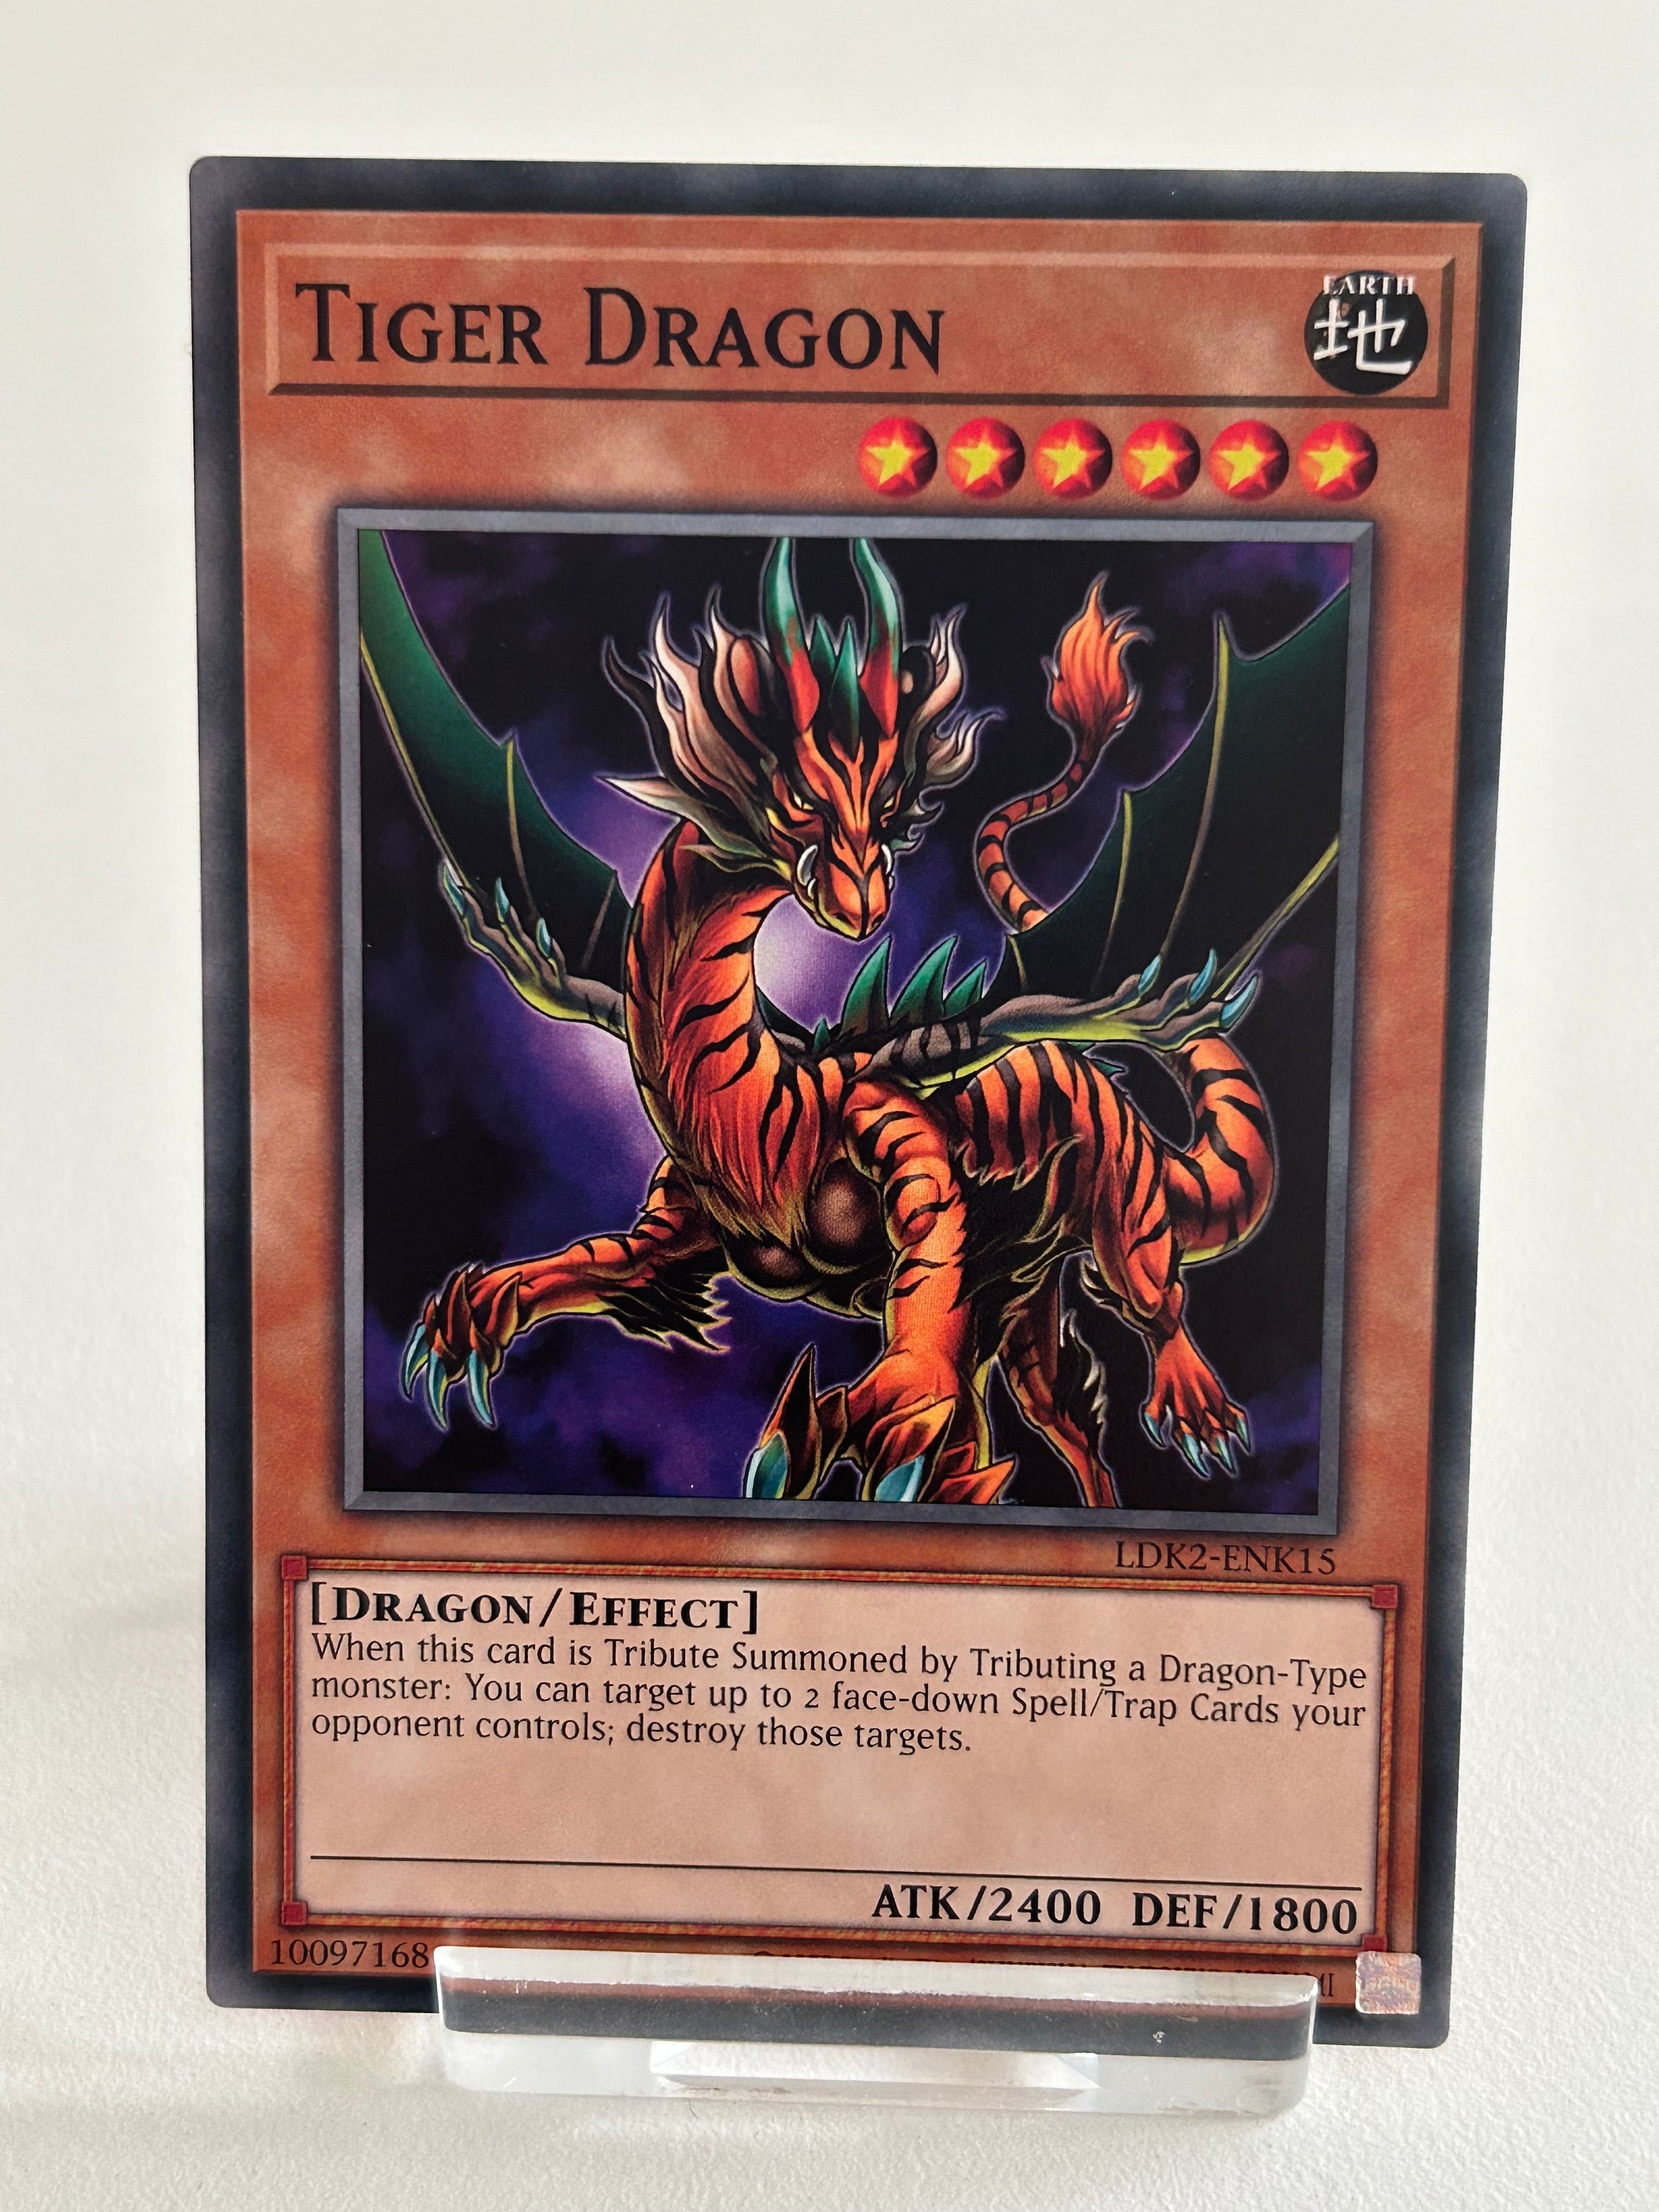 Tiger Dragon - LDK2-ENK15 - Common - 1st Edition - YuGiOh 